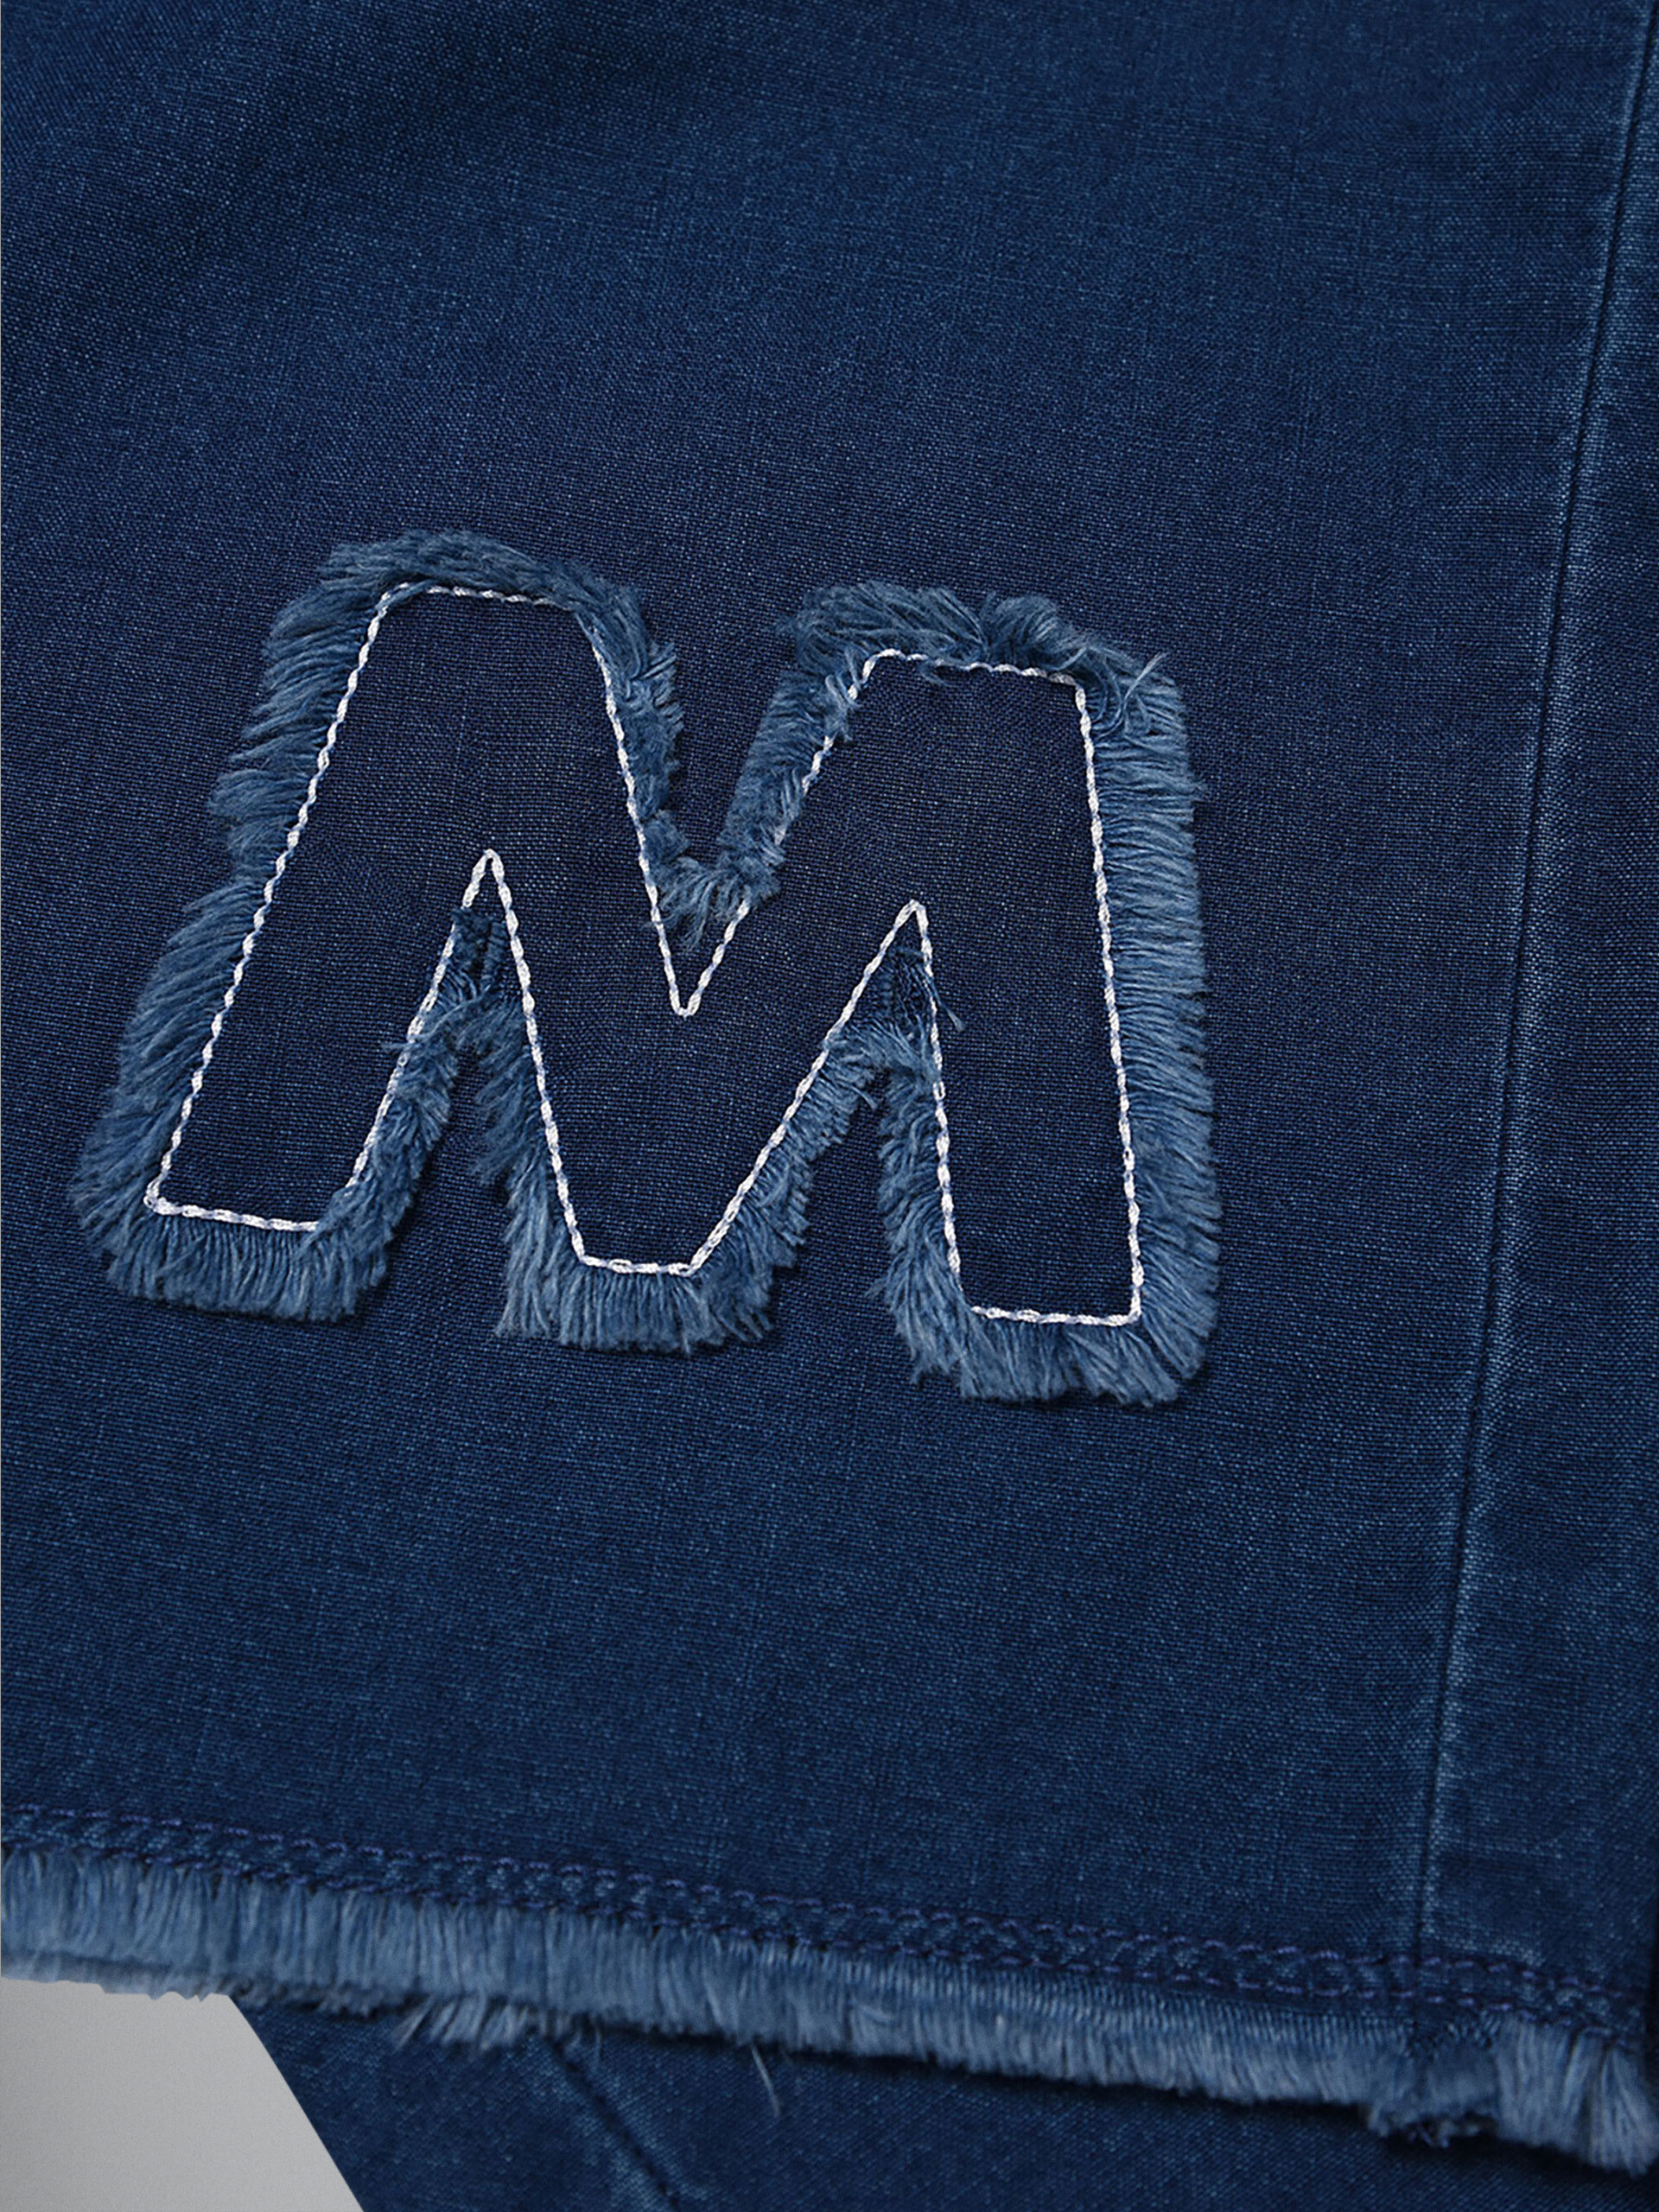 Pantalón de denim "M" - Pantalones - Image 3